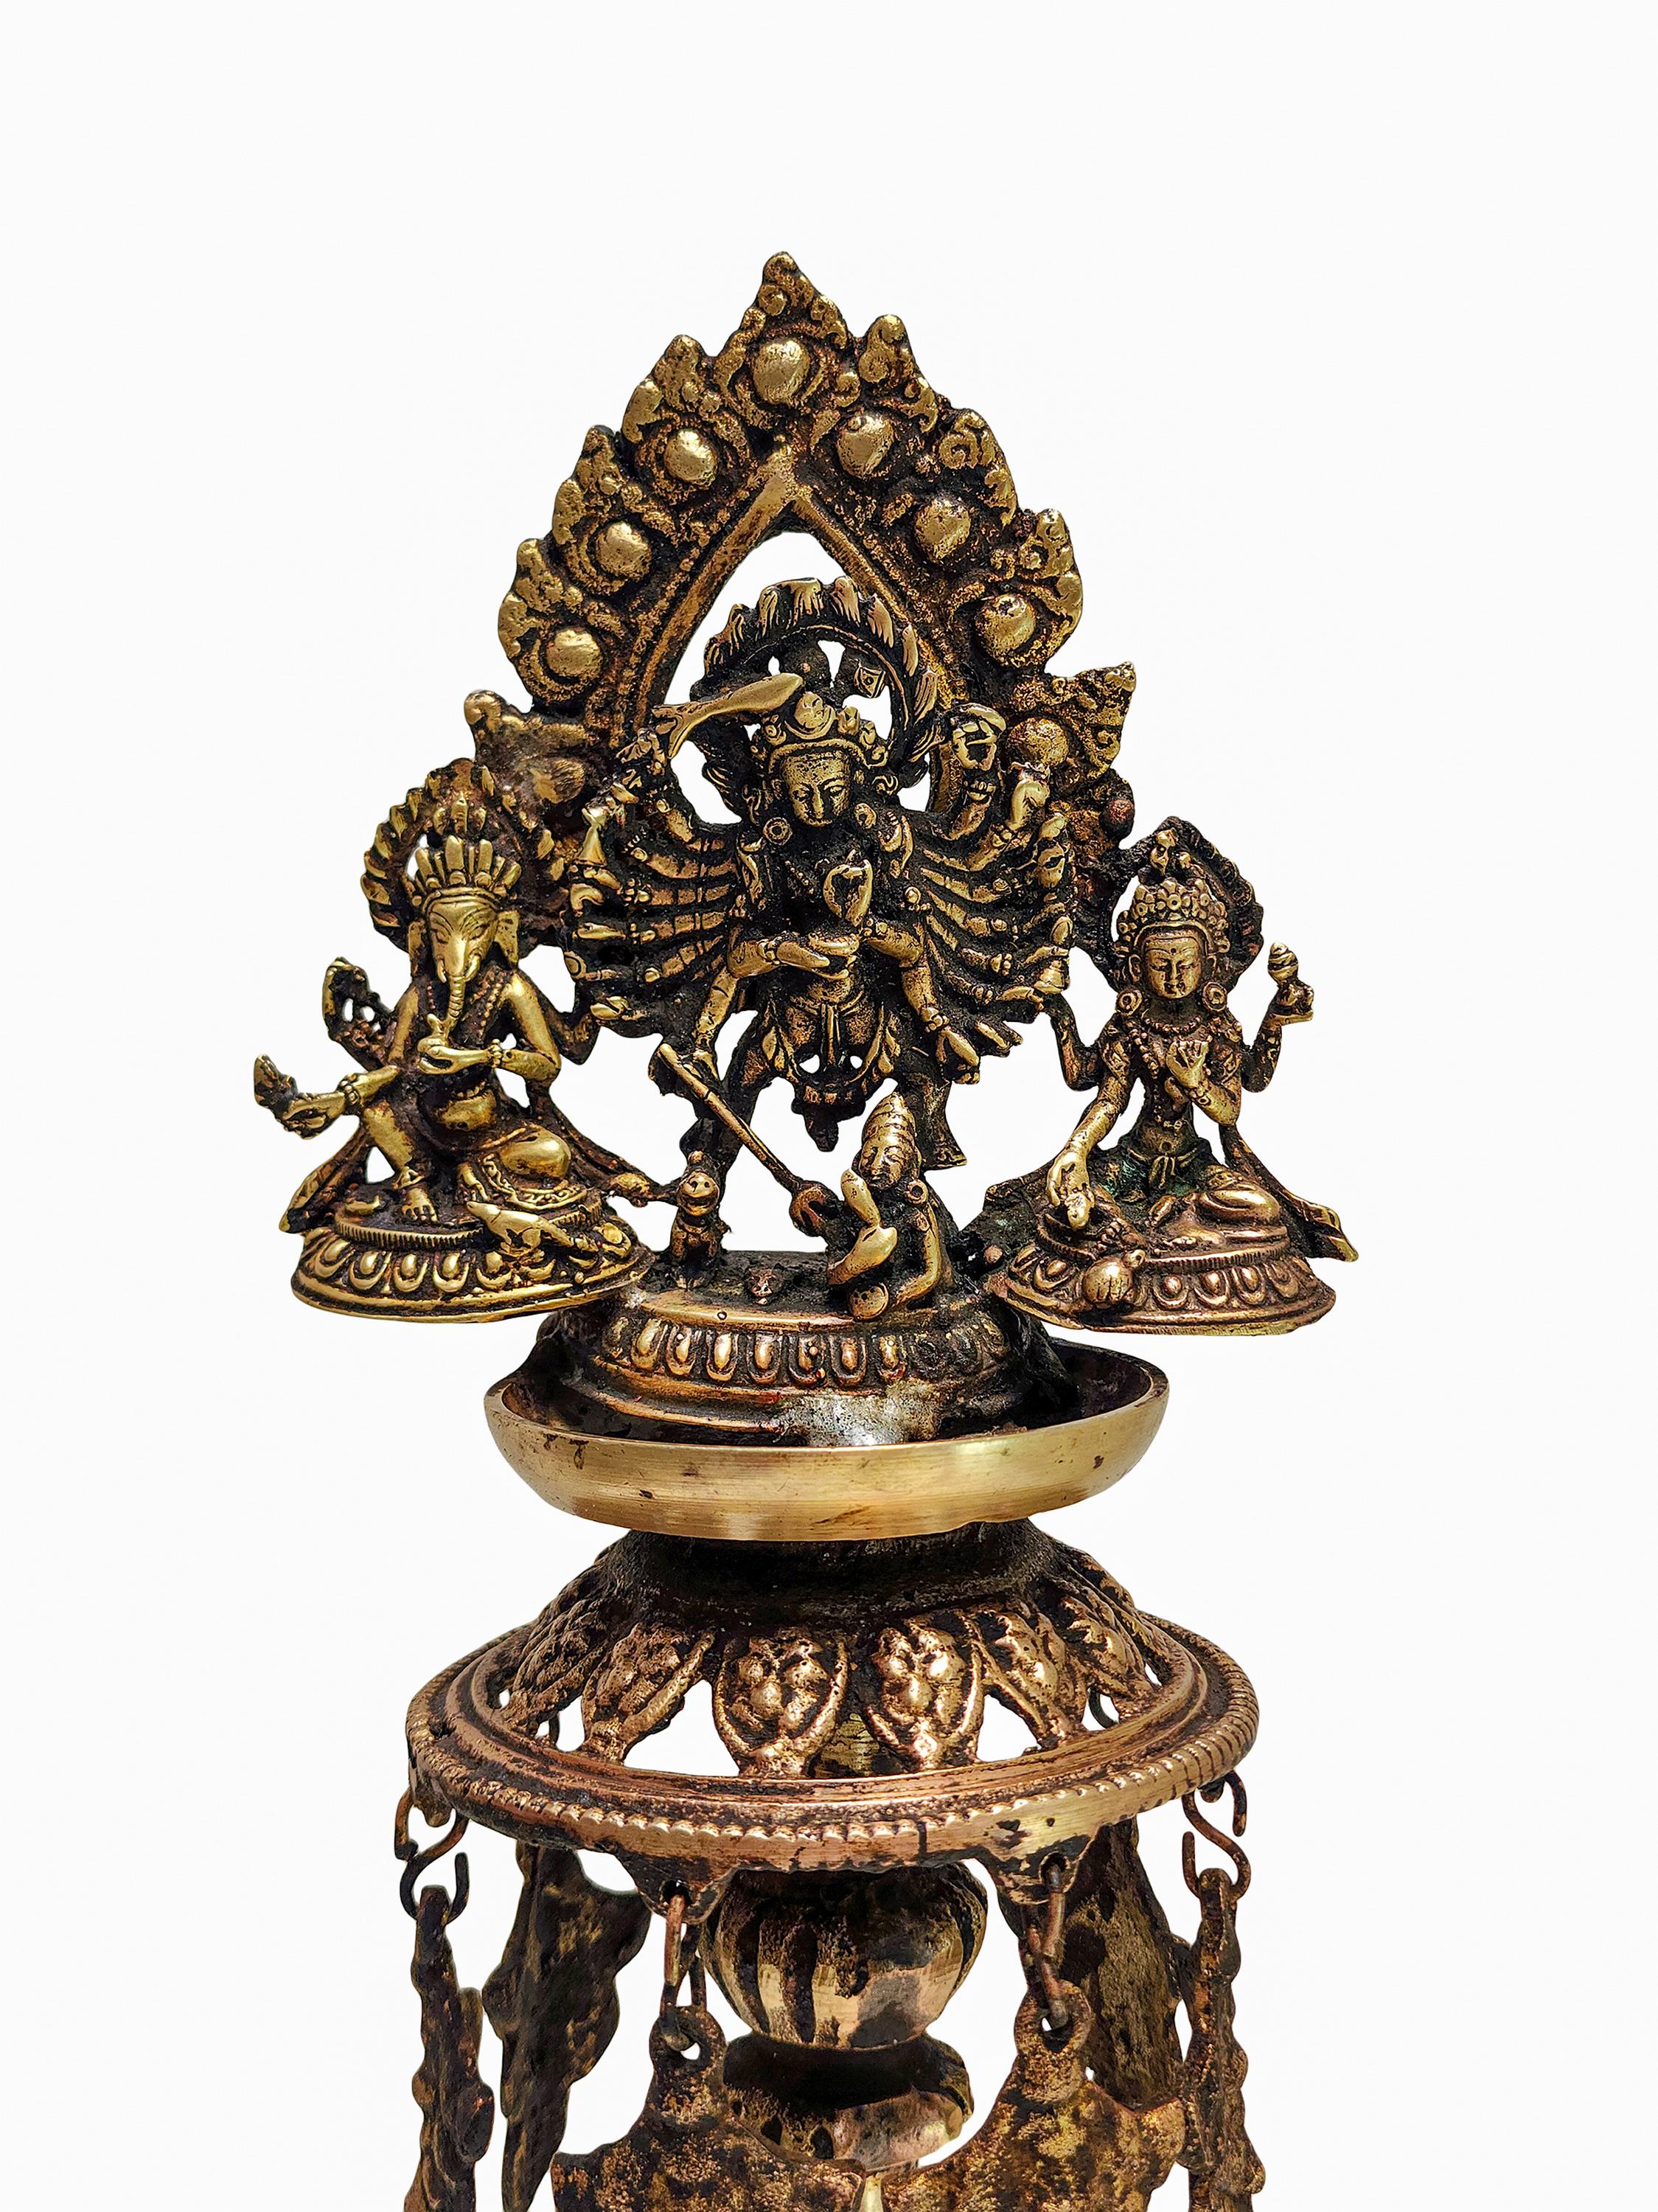 unique, Statue Of Panas, Oil Lamp, Sukunda With Bhadrakali, Ganesh And Laksmi Or Laxmi, Panas, antique Finishing